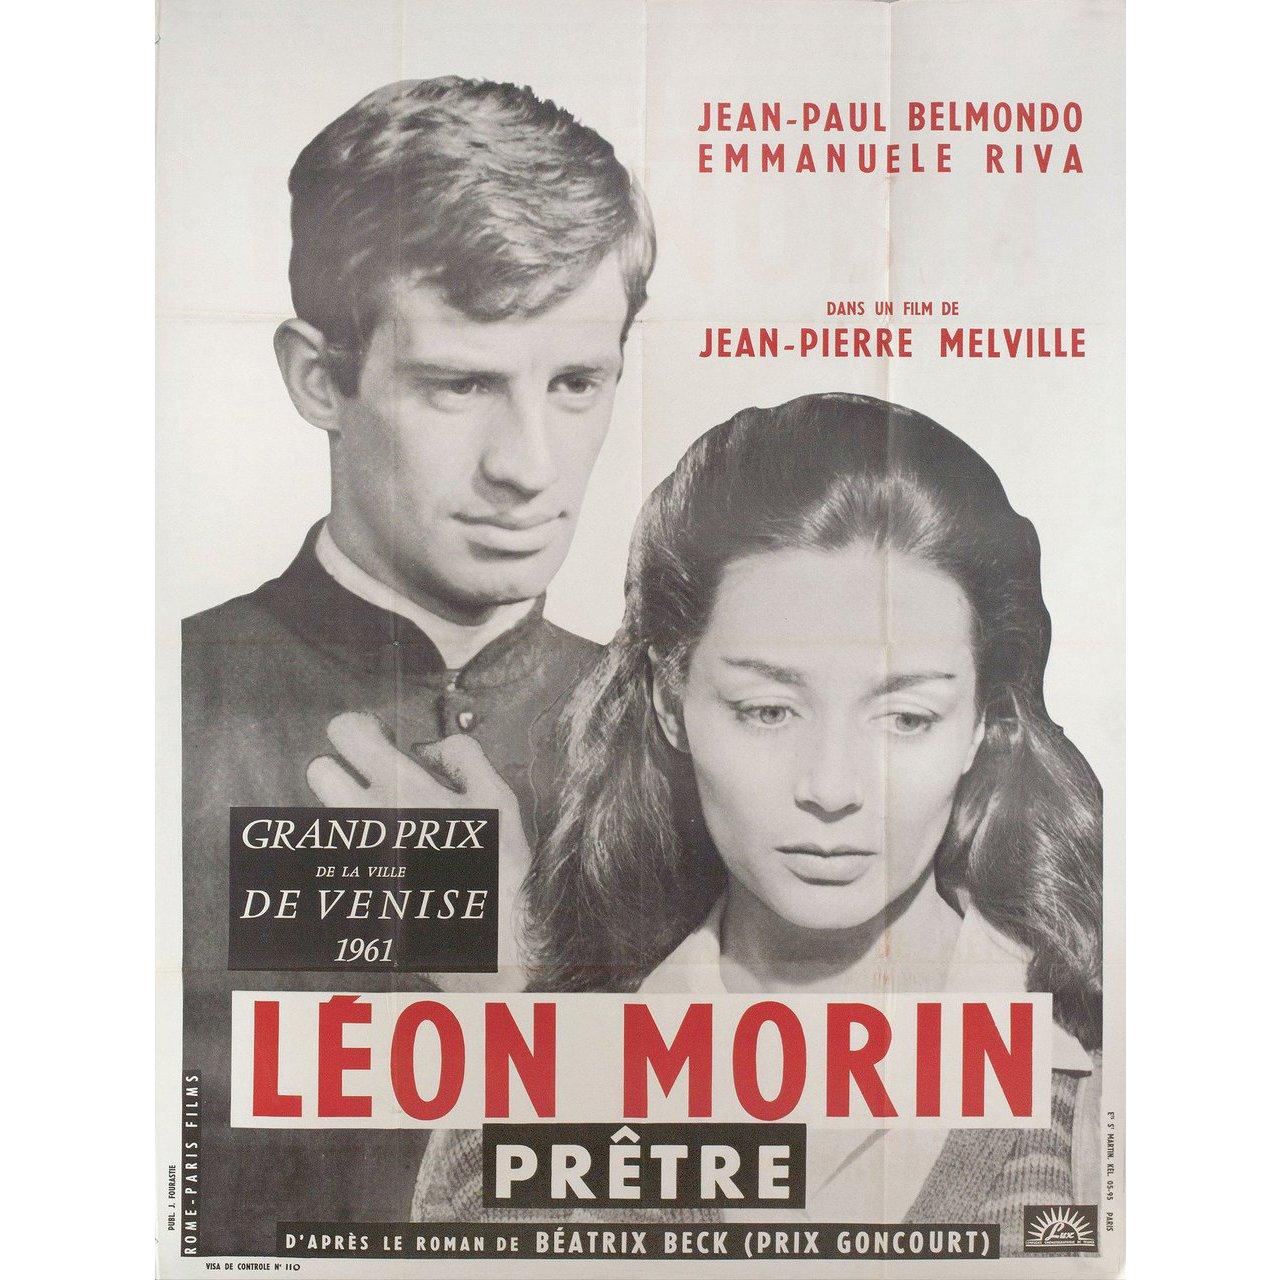 leon morin priest poster